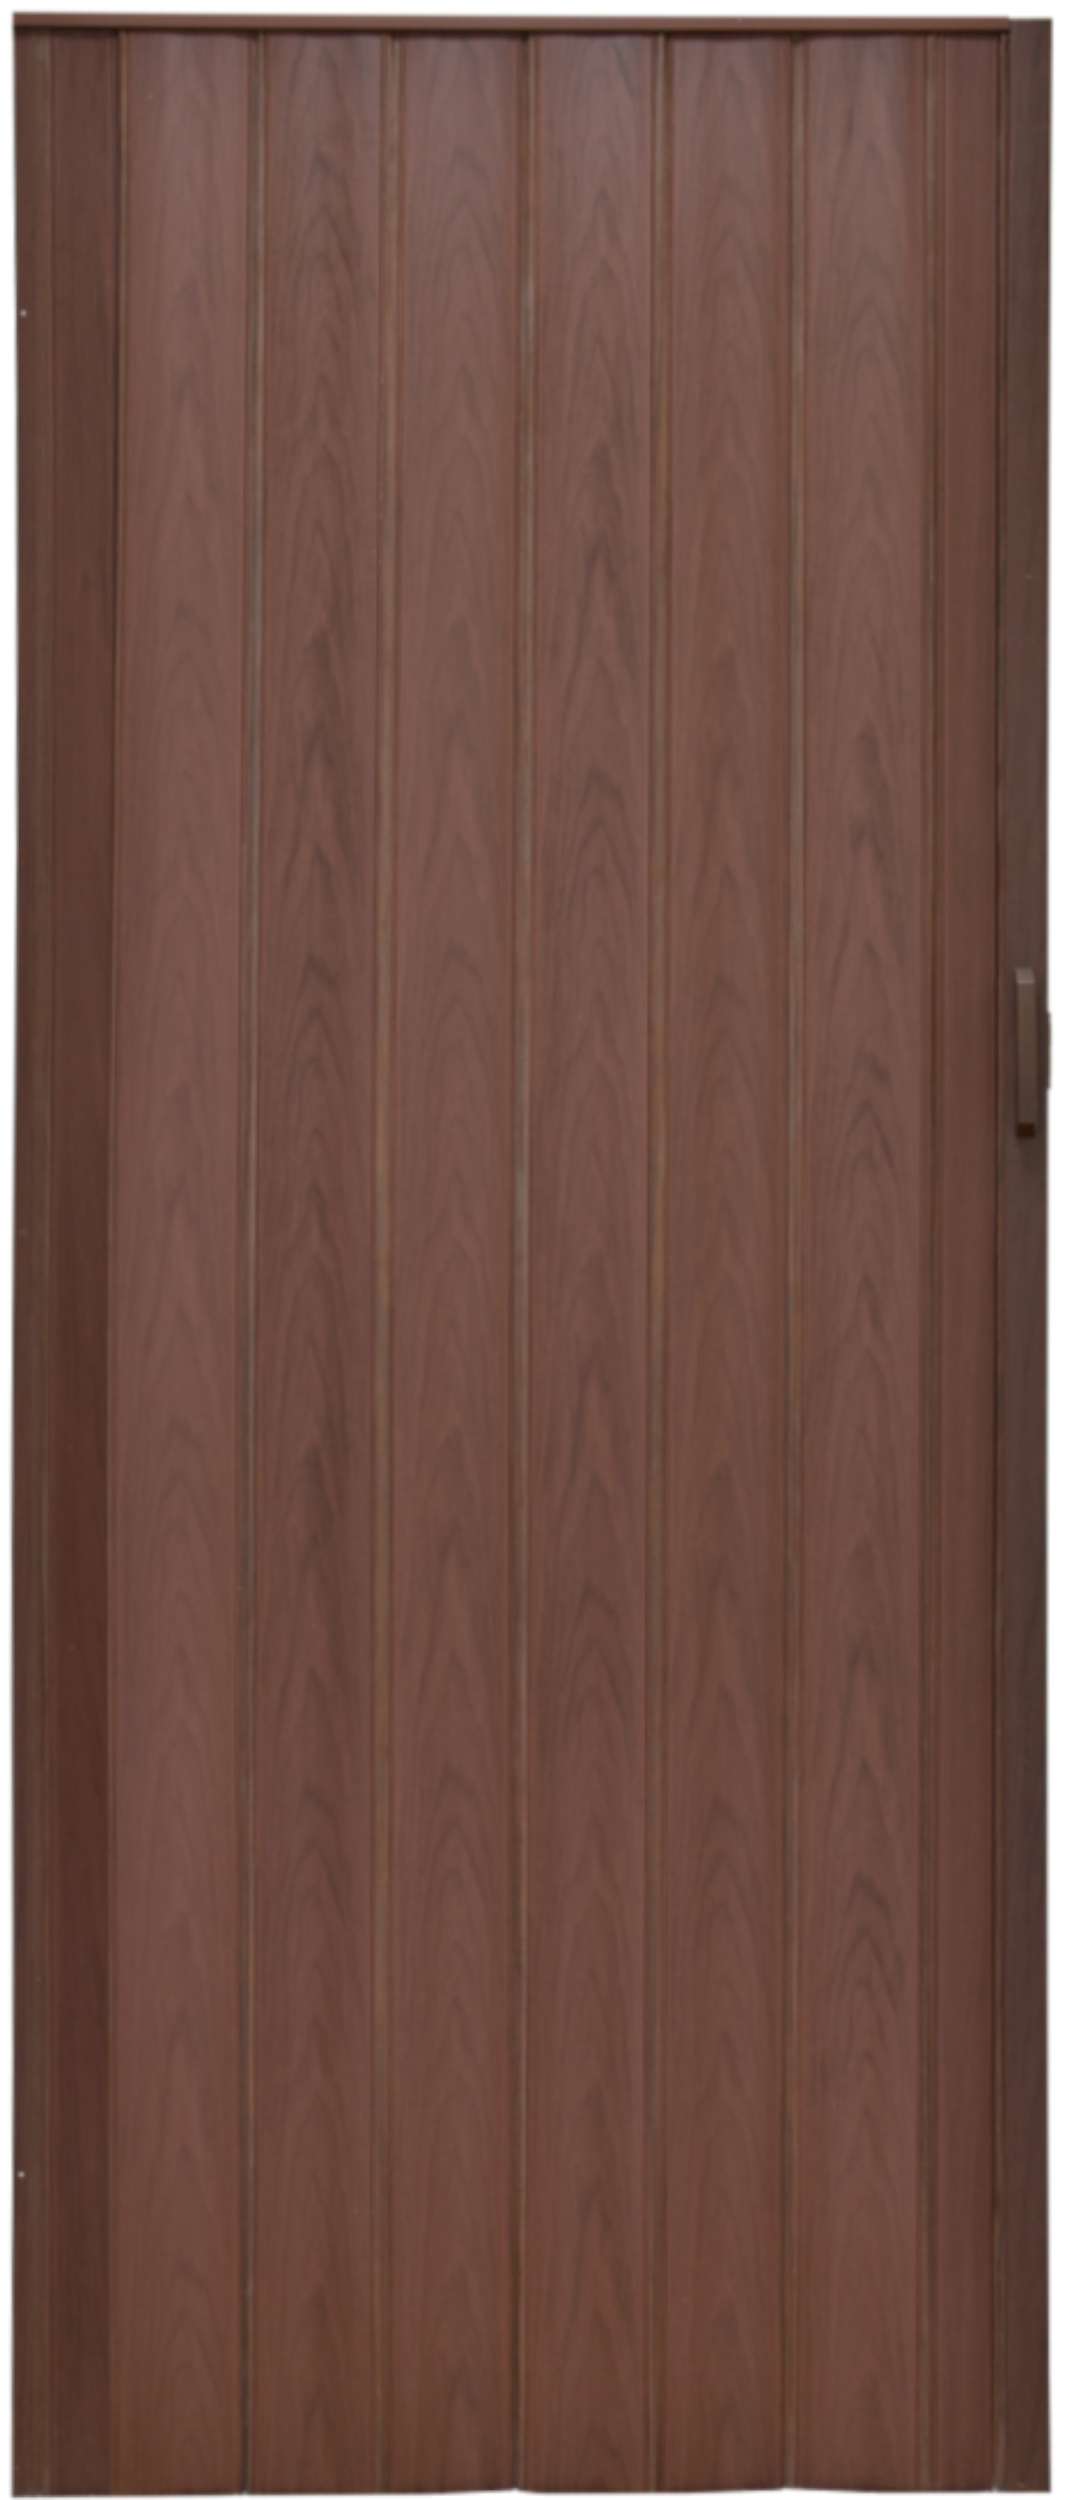 Drzwi harmonijkowe 004-100-01 wenge 100 cm